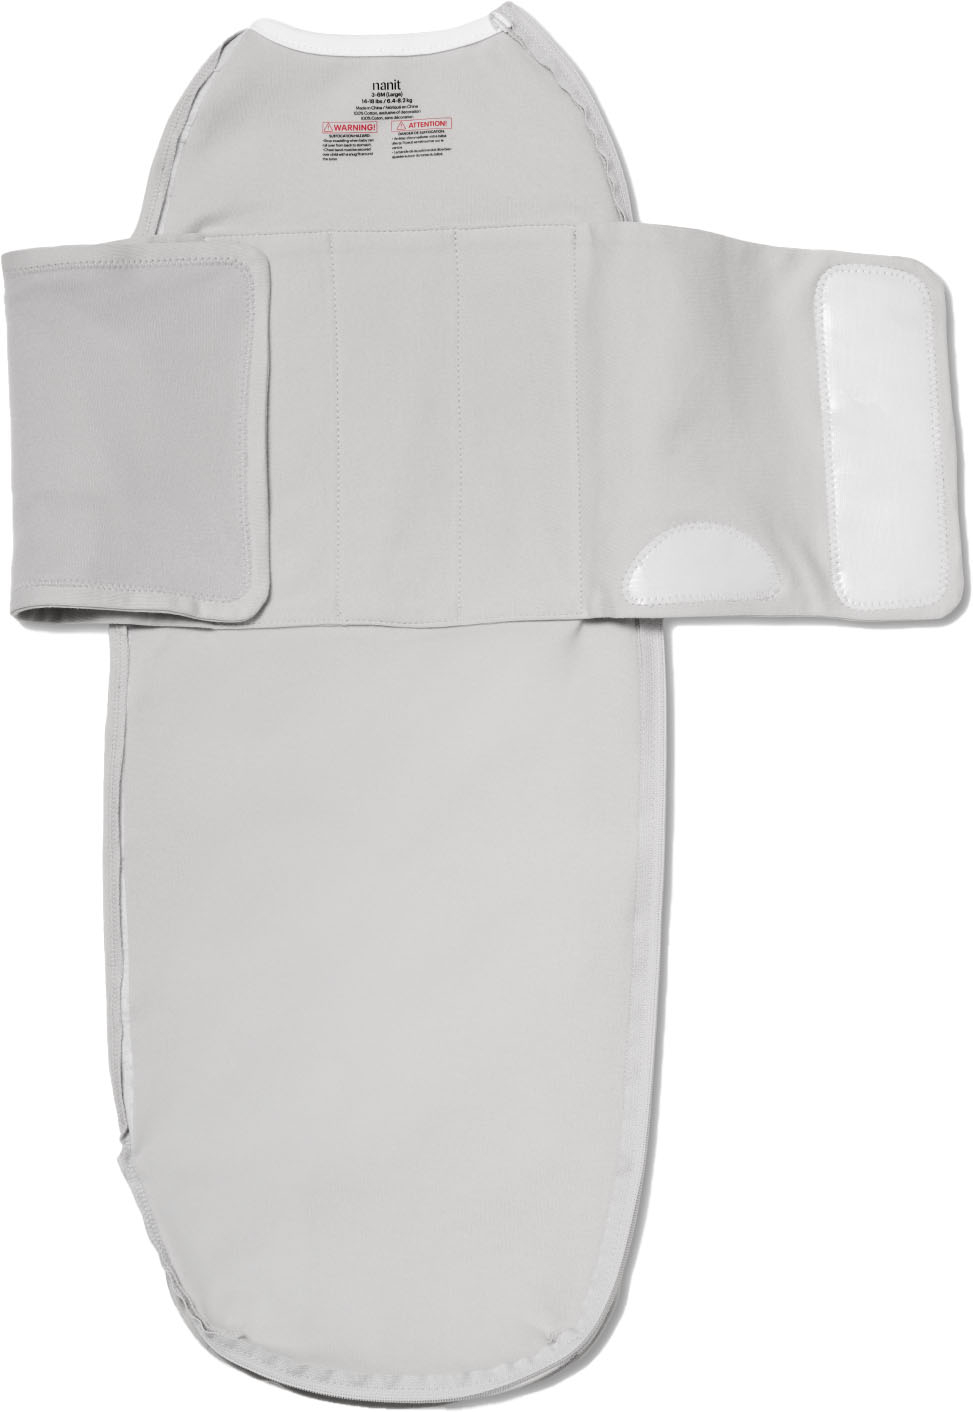 Angle View: Nanit Breathingwear Swaddle - 3-6M - Pebble Grey - Gray